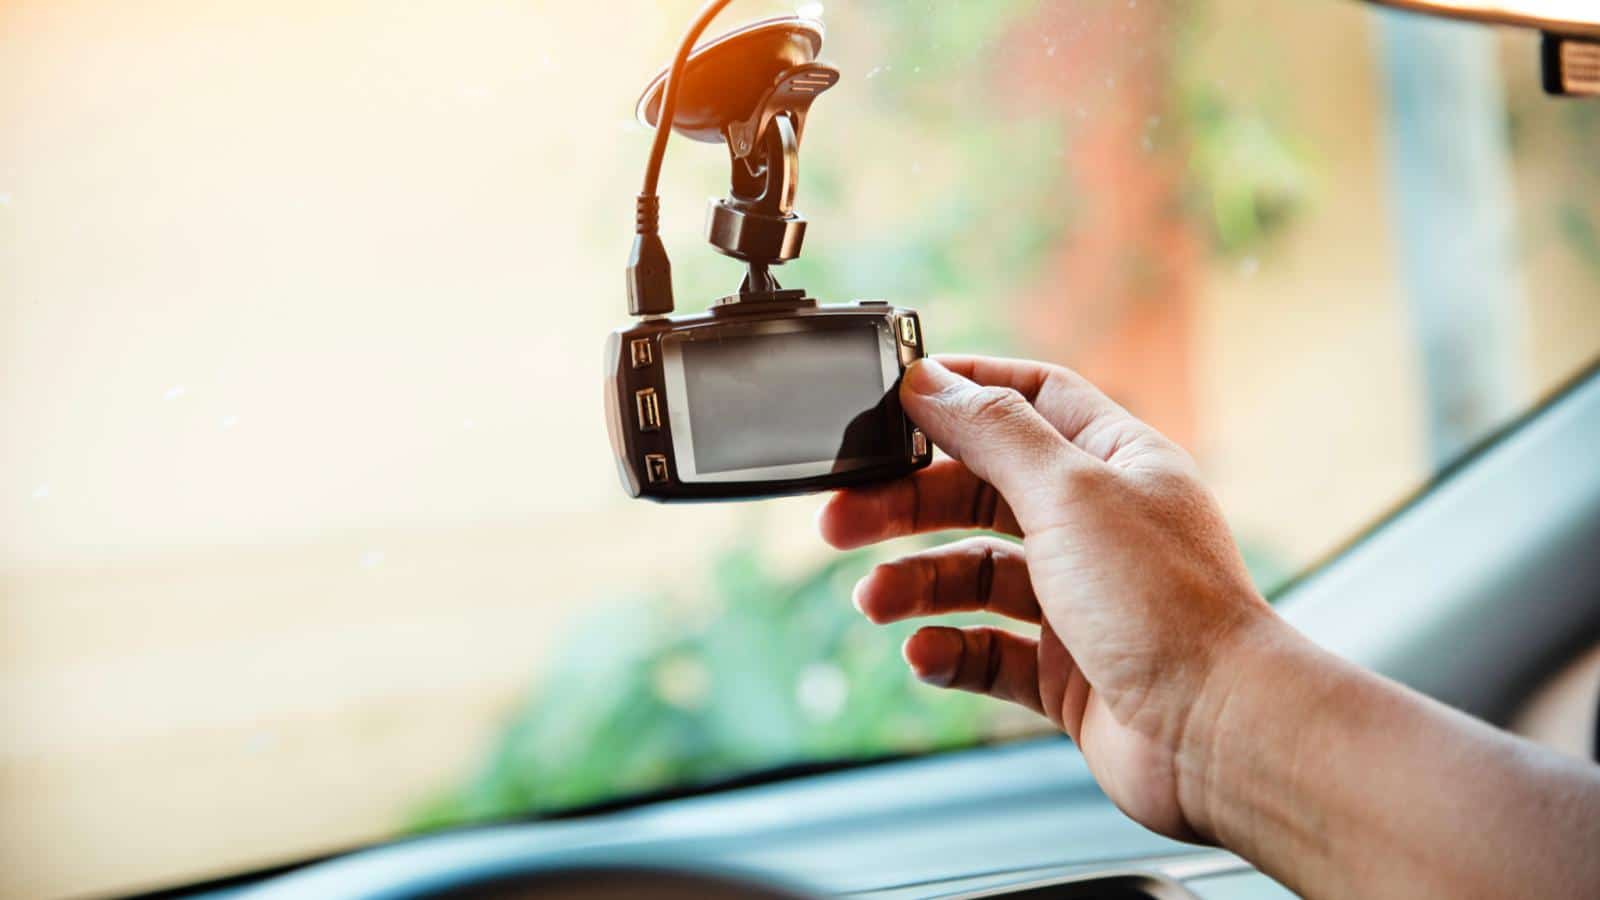 Caméra embarquée de voiture : comparatif des meilleures dashcam